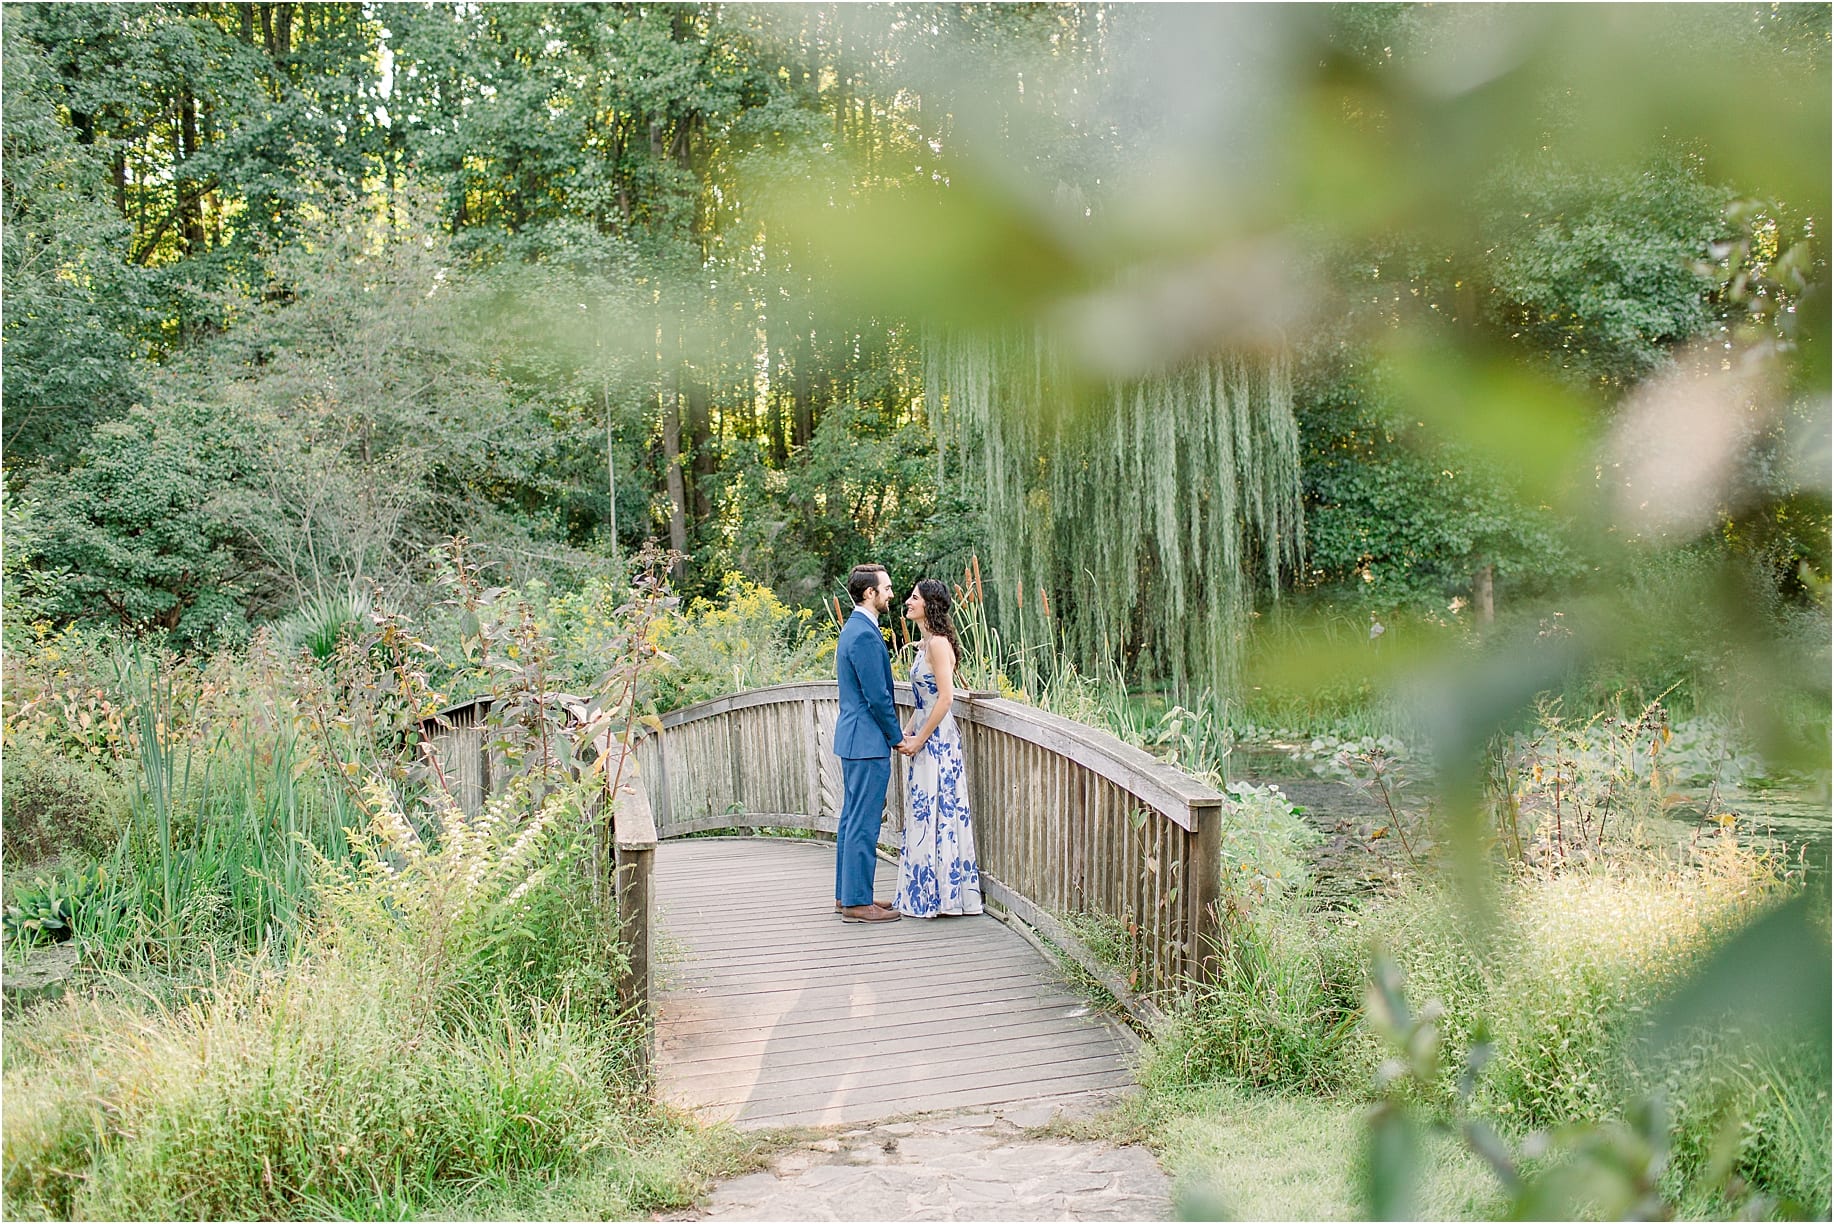 Meadowlark Botanical Gardens Engagements DC wedding photographer erika mills_0006.jpg